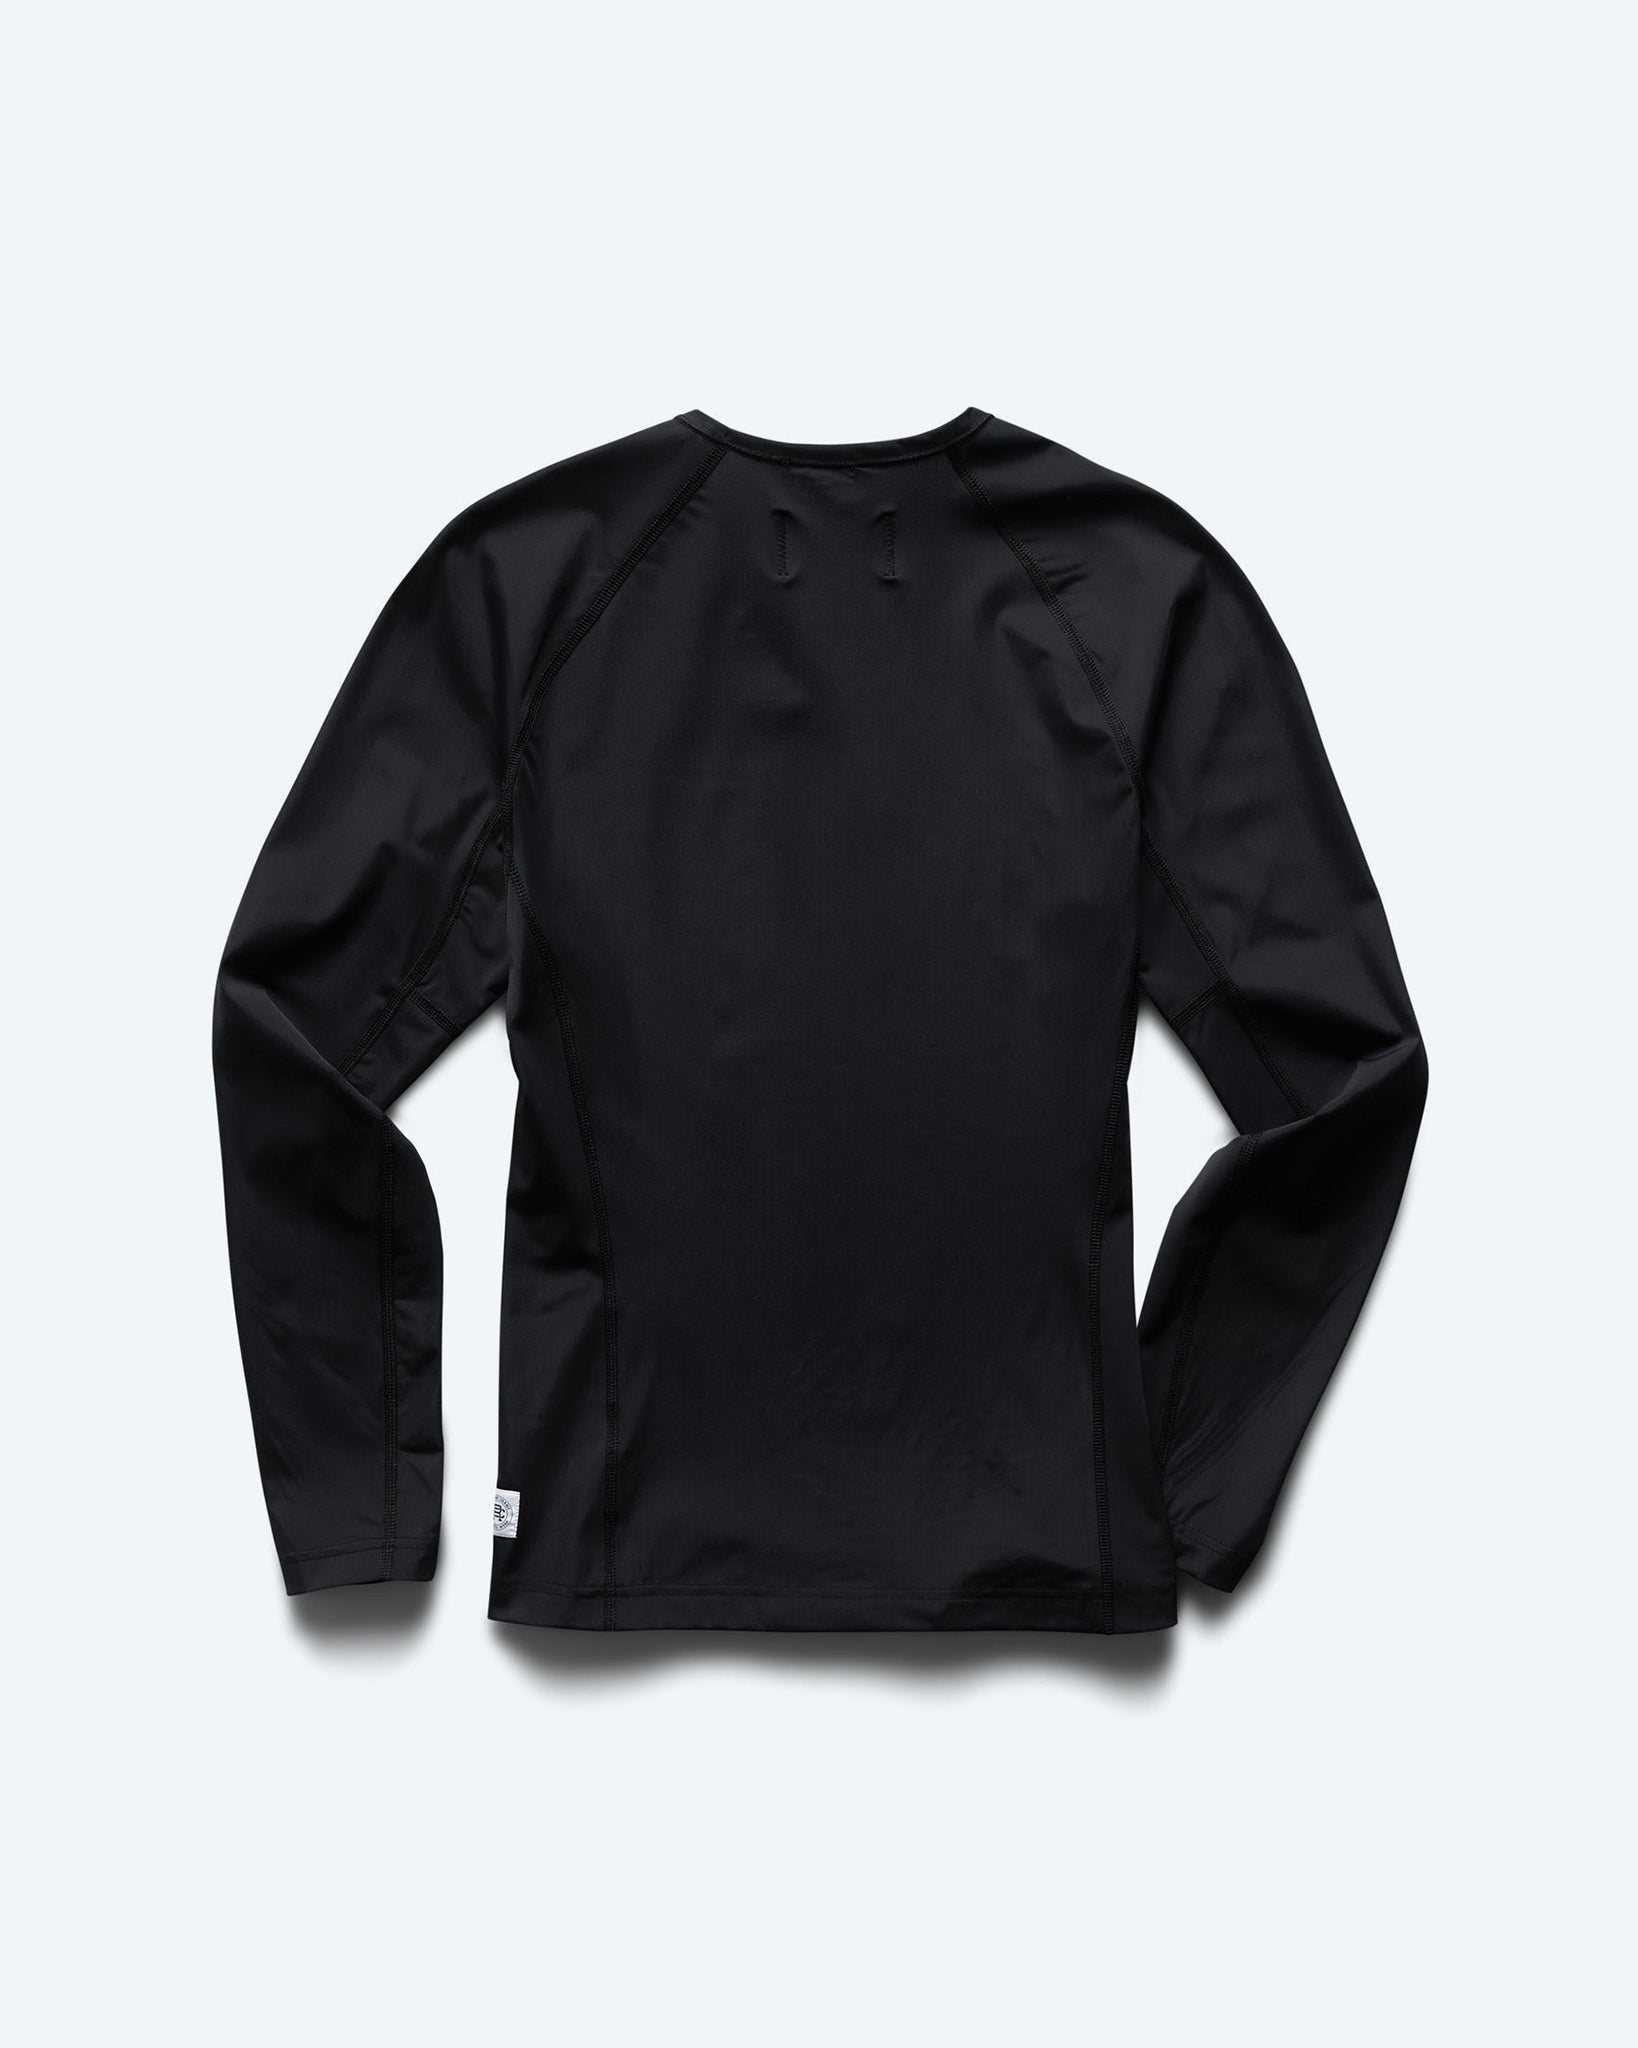 Long Sleeve Shirt Black  compression shirt black – BFIT Fashion